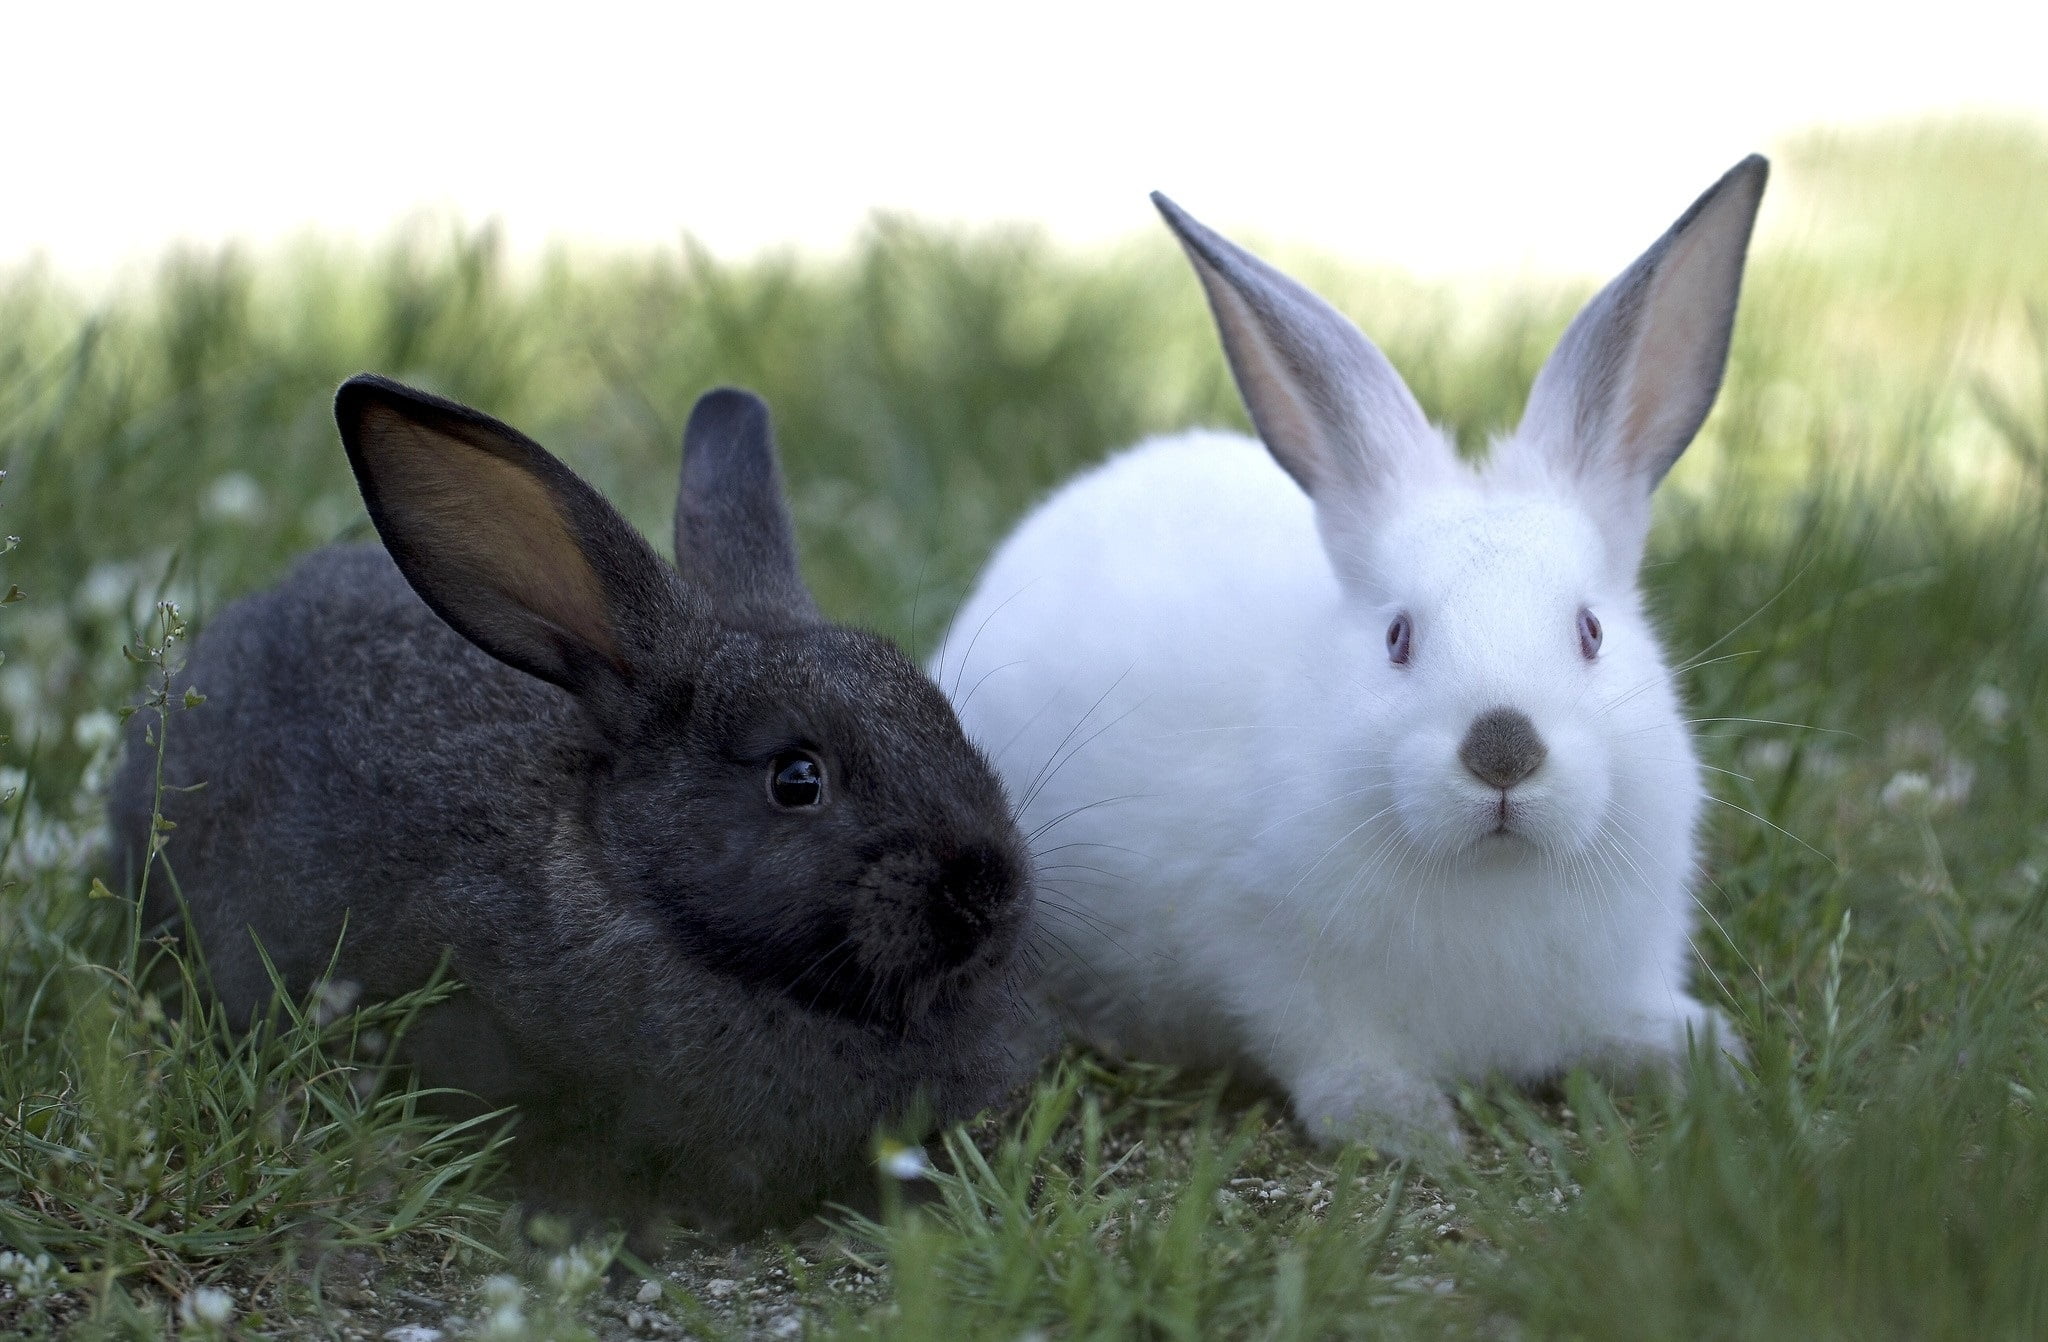 two gray and white rabbits, black, pair, animal, rabbit - animal